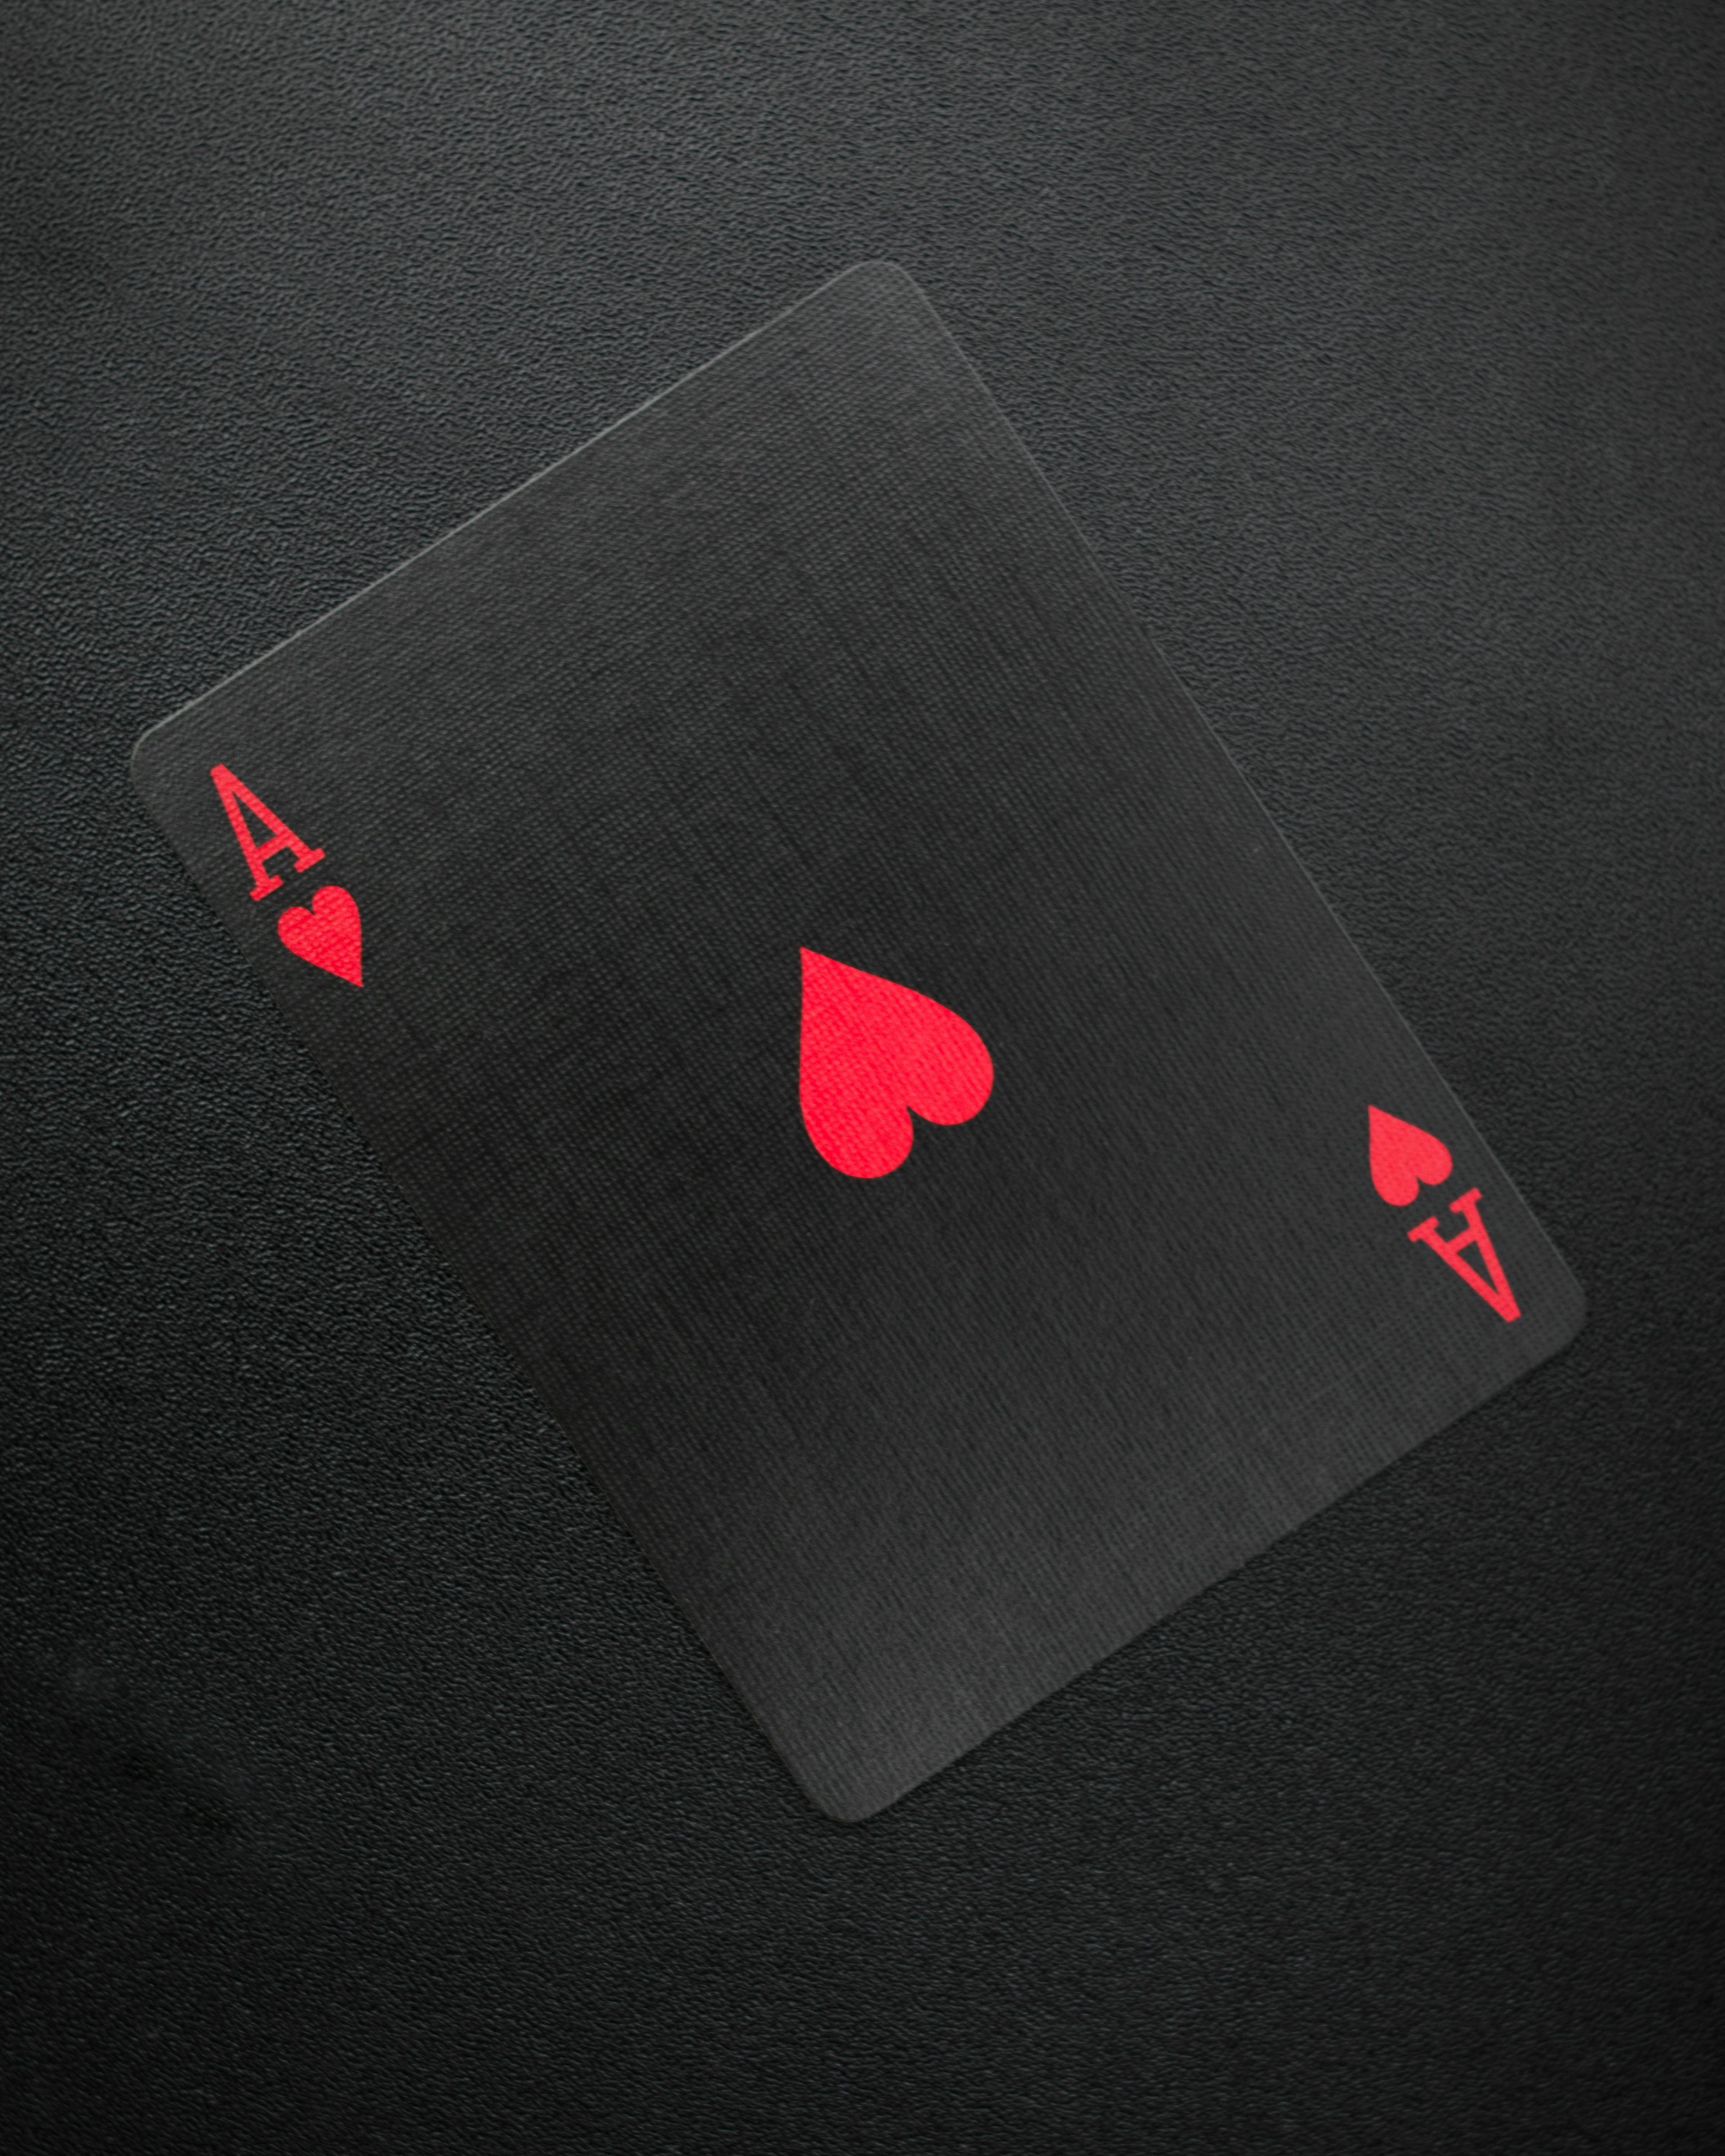 Burning Ace Card Poker IPhone Wallpaper HD  IPhone Wallpapers  iPhone  Wallpapers